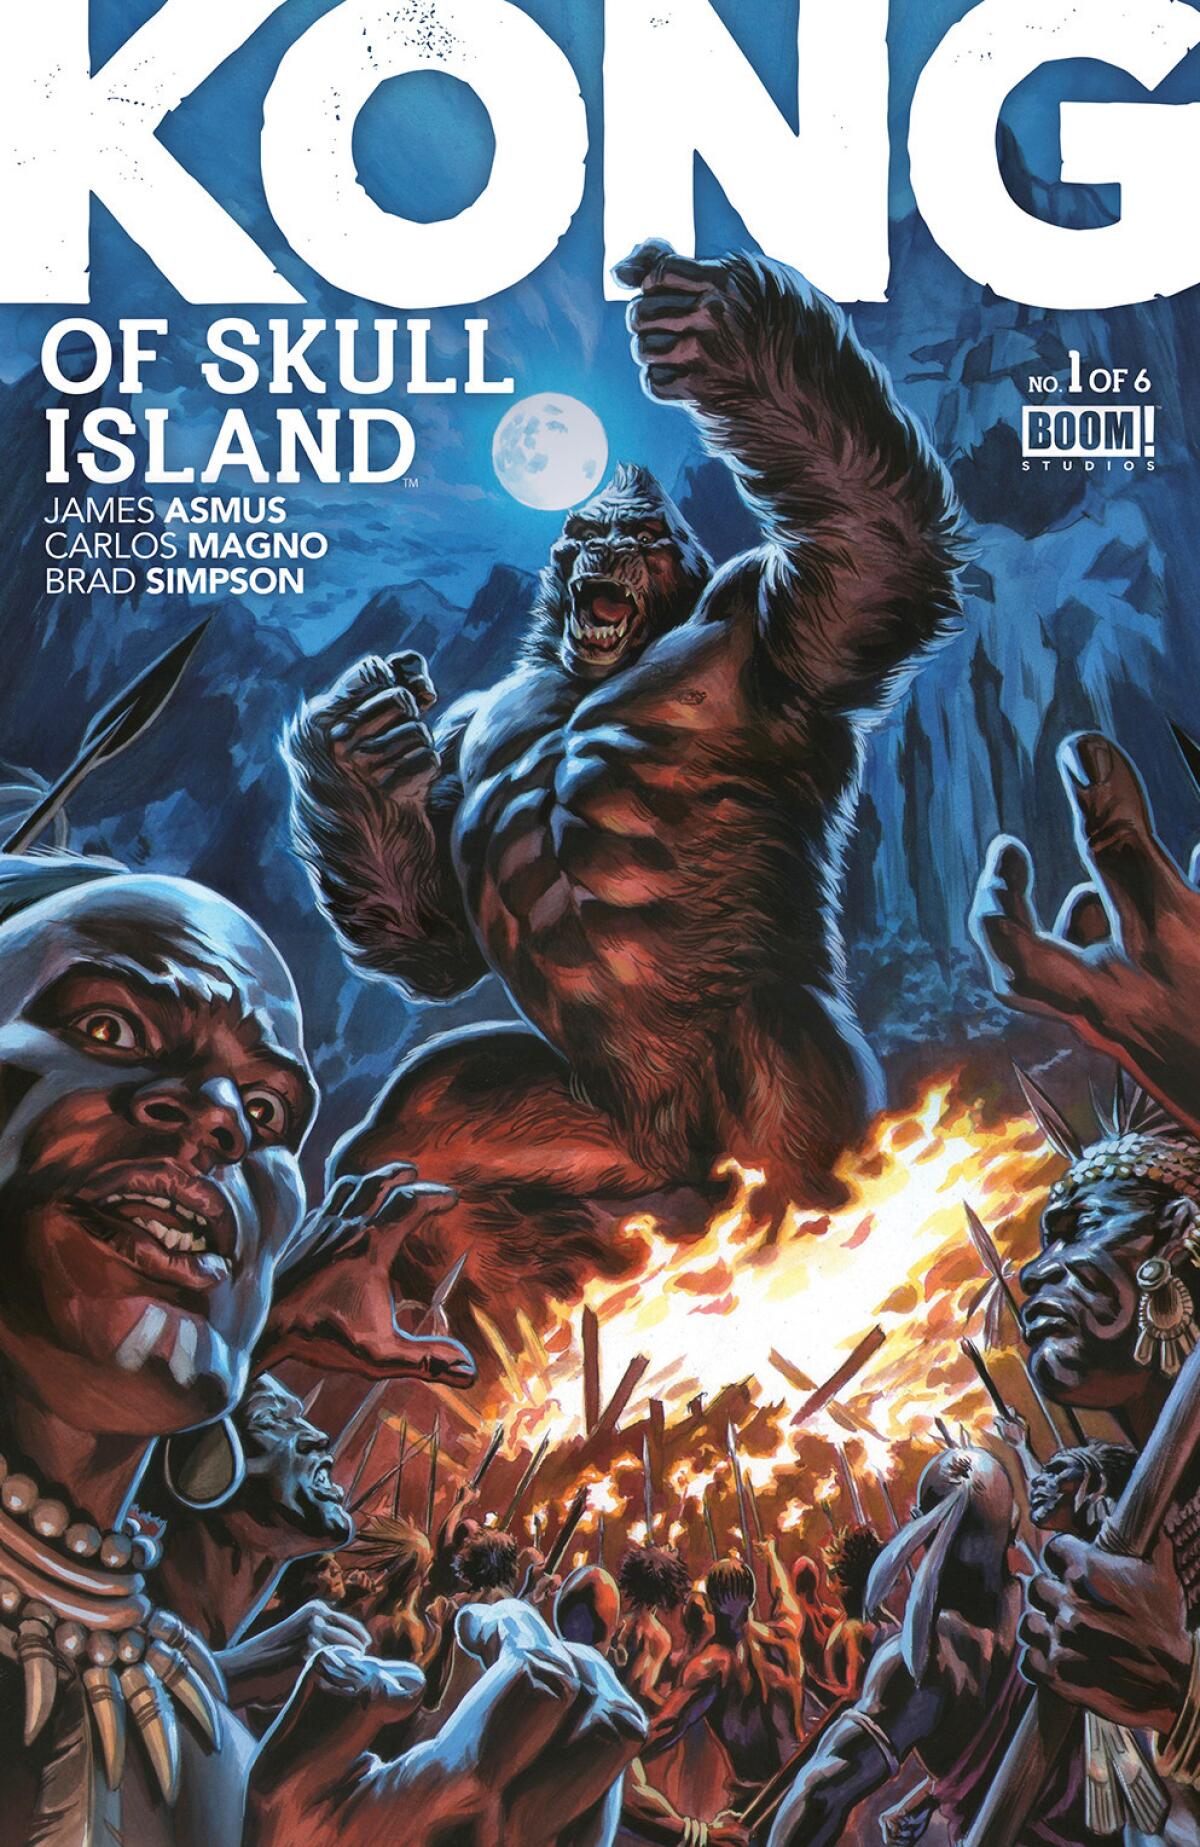 The cover for "Kong of Skull Island" No. 1. (Felipe Massafera / Boom! Studios)